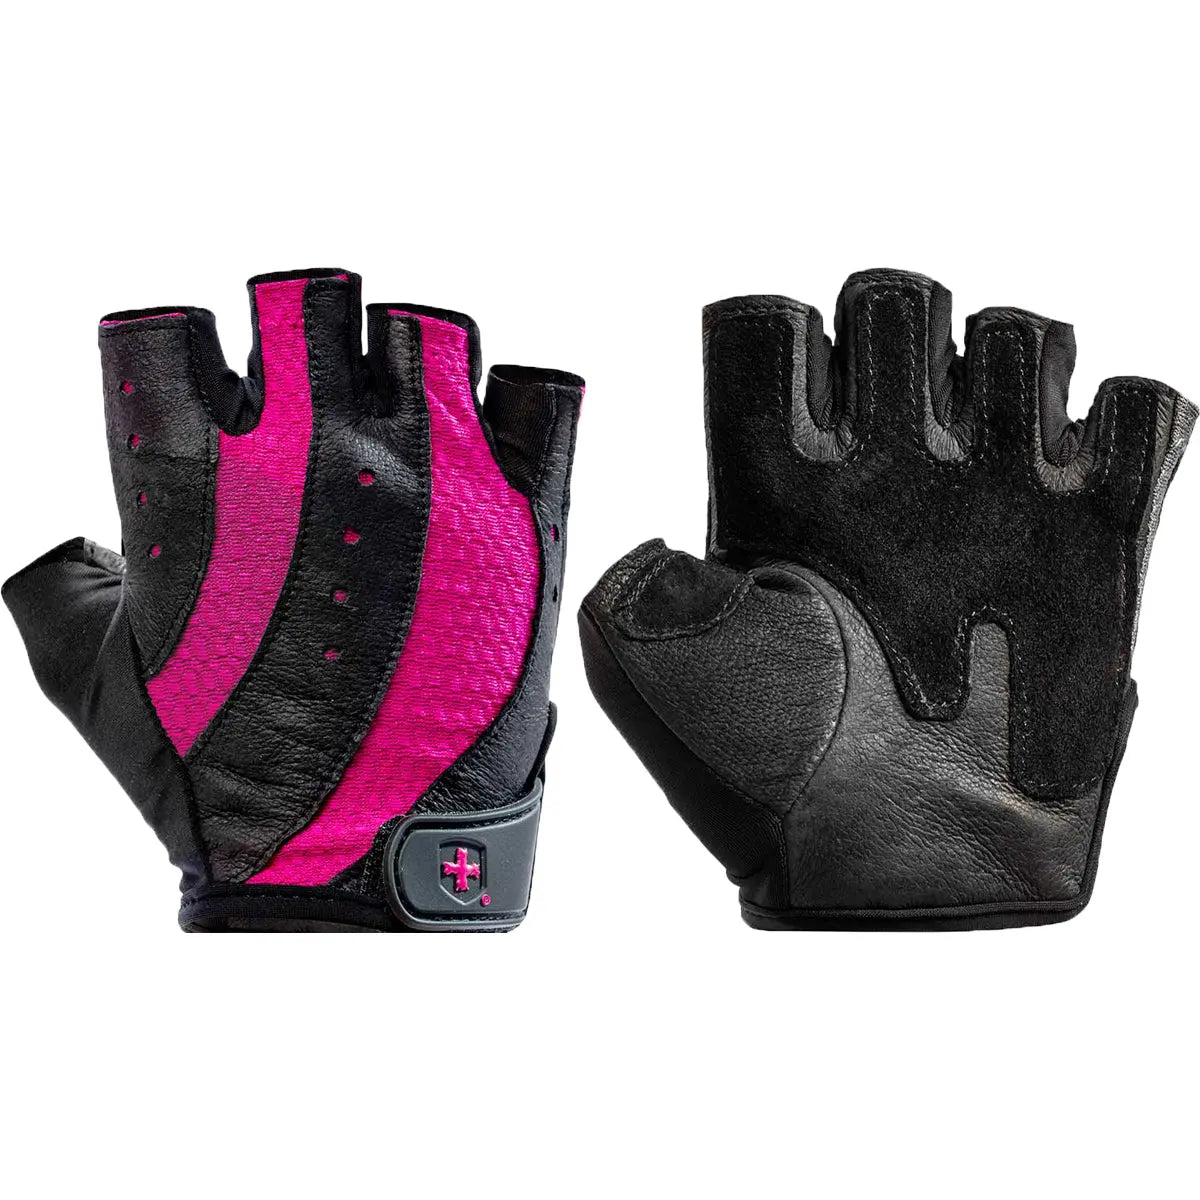 Harbinger 149 Women's Pro Weight Lifting Gloves - Black/Pink Harbinger